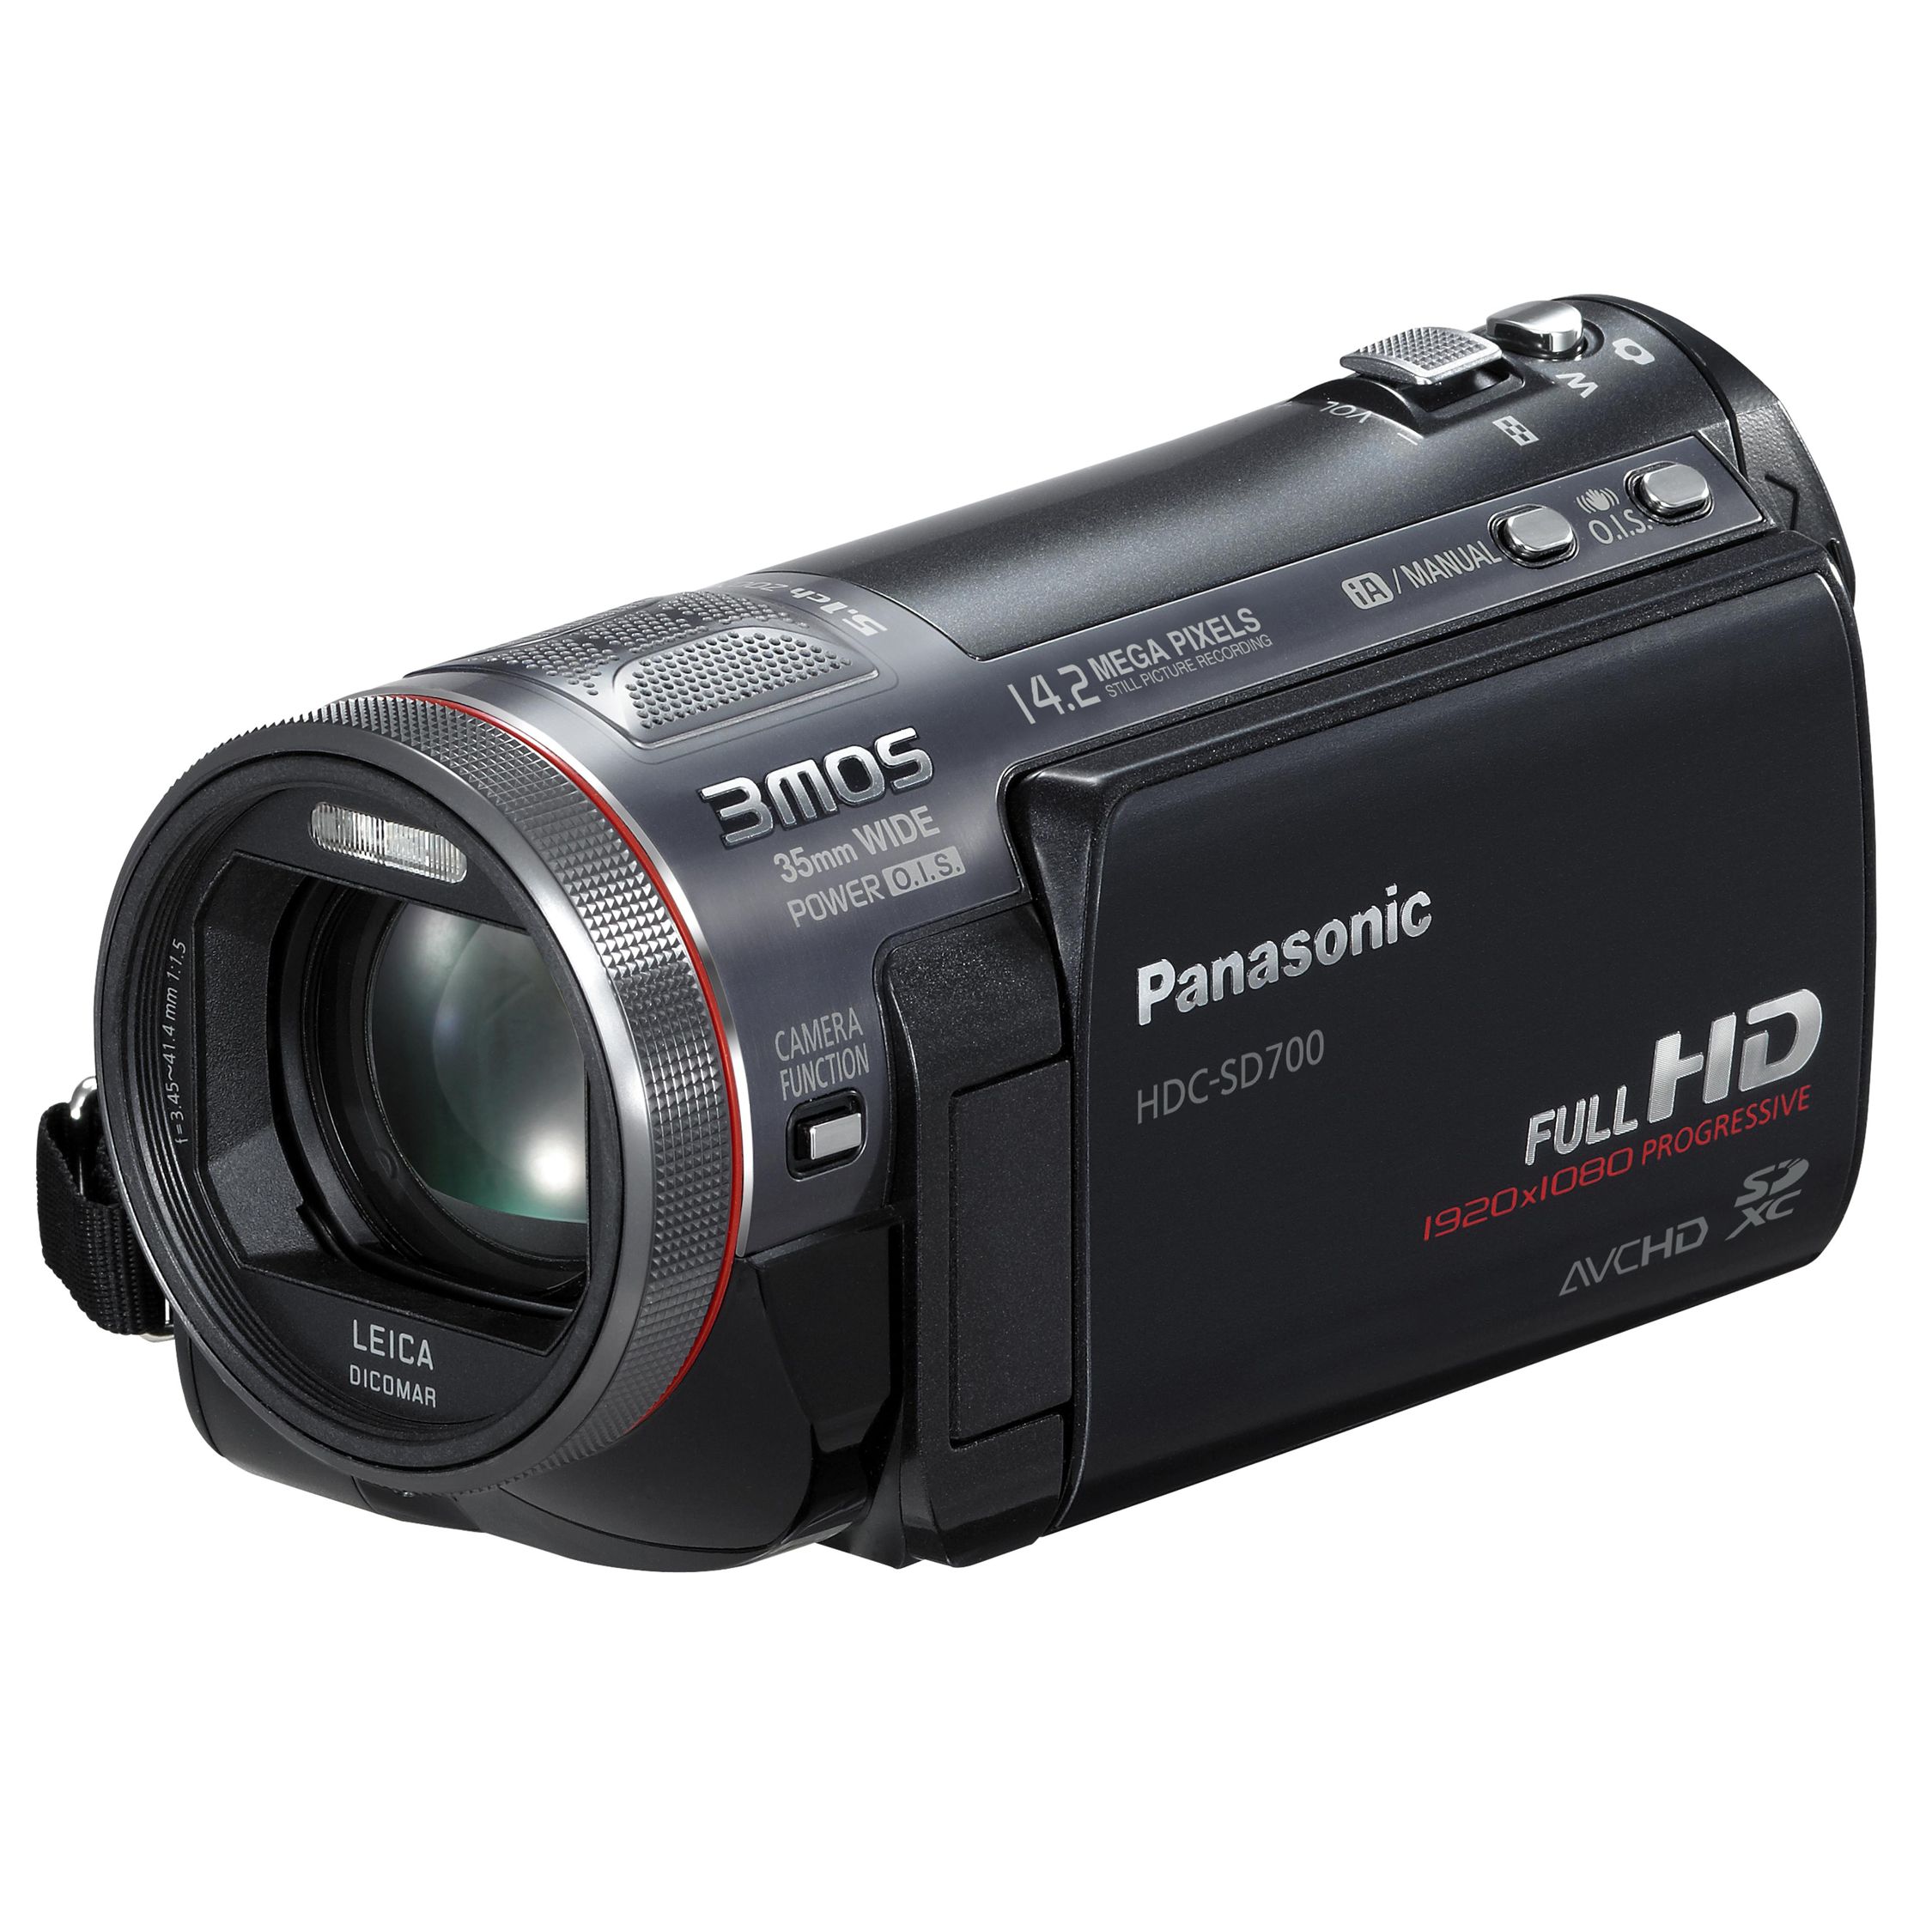 Panasonic HDC-SD700EB-K High Definition SD Camcorder, Black at John Lewis